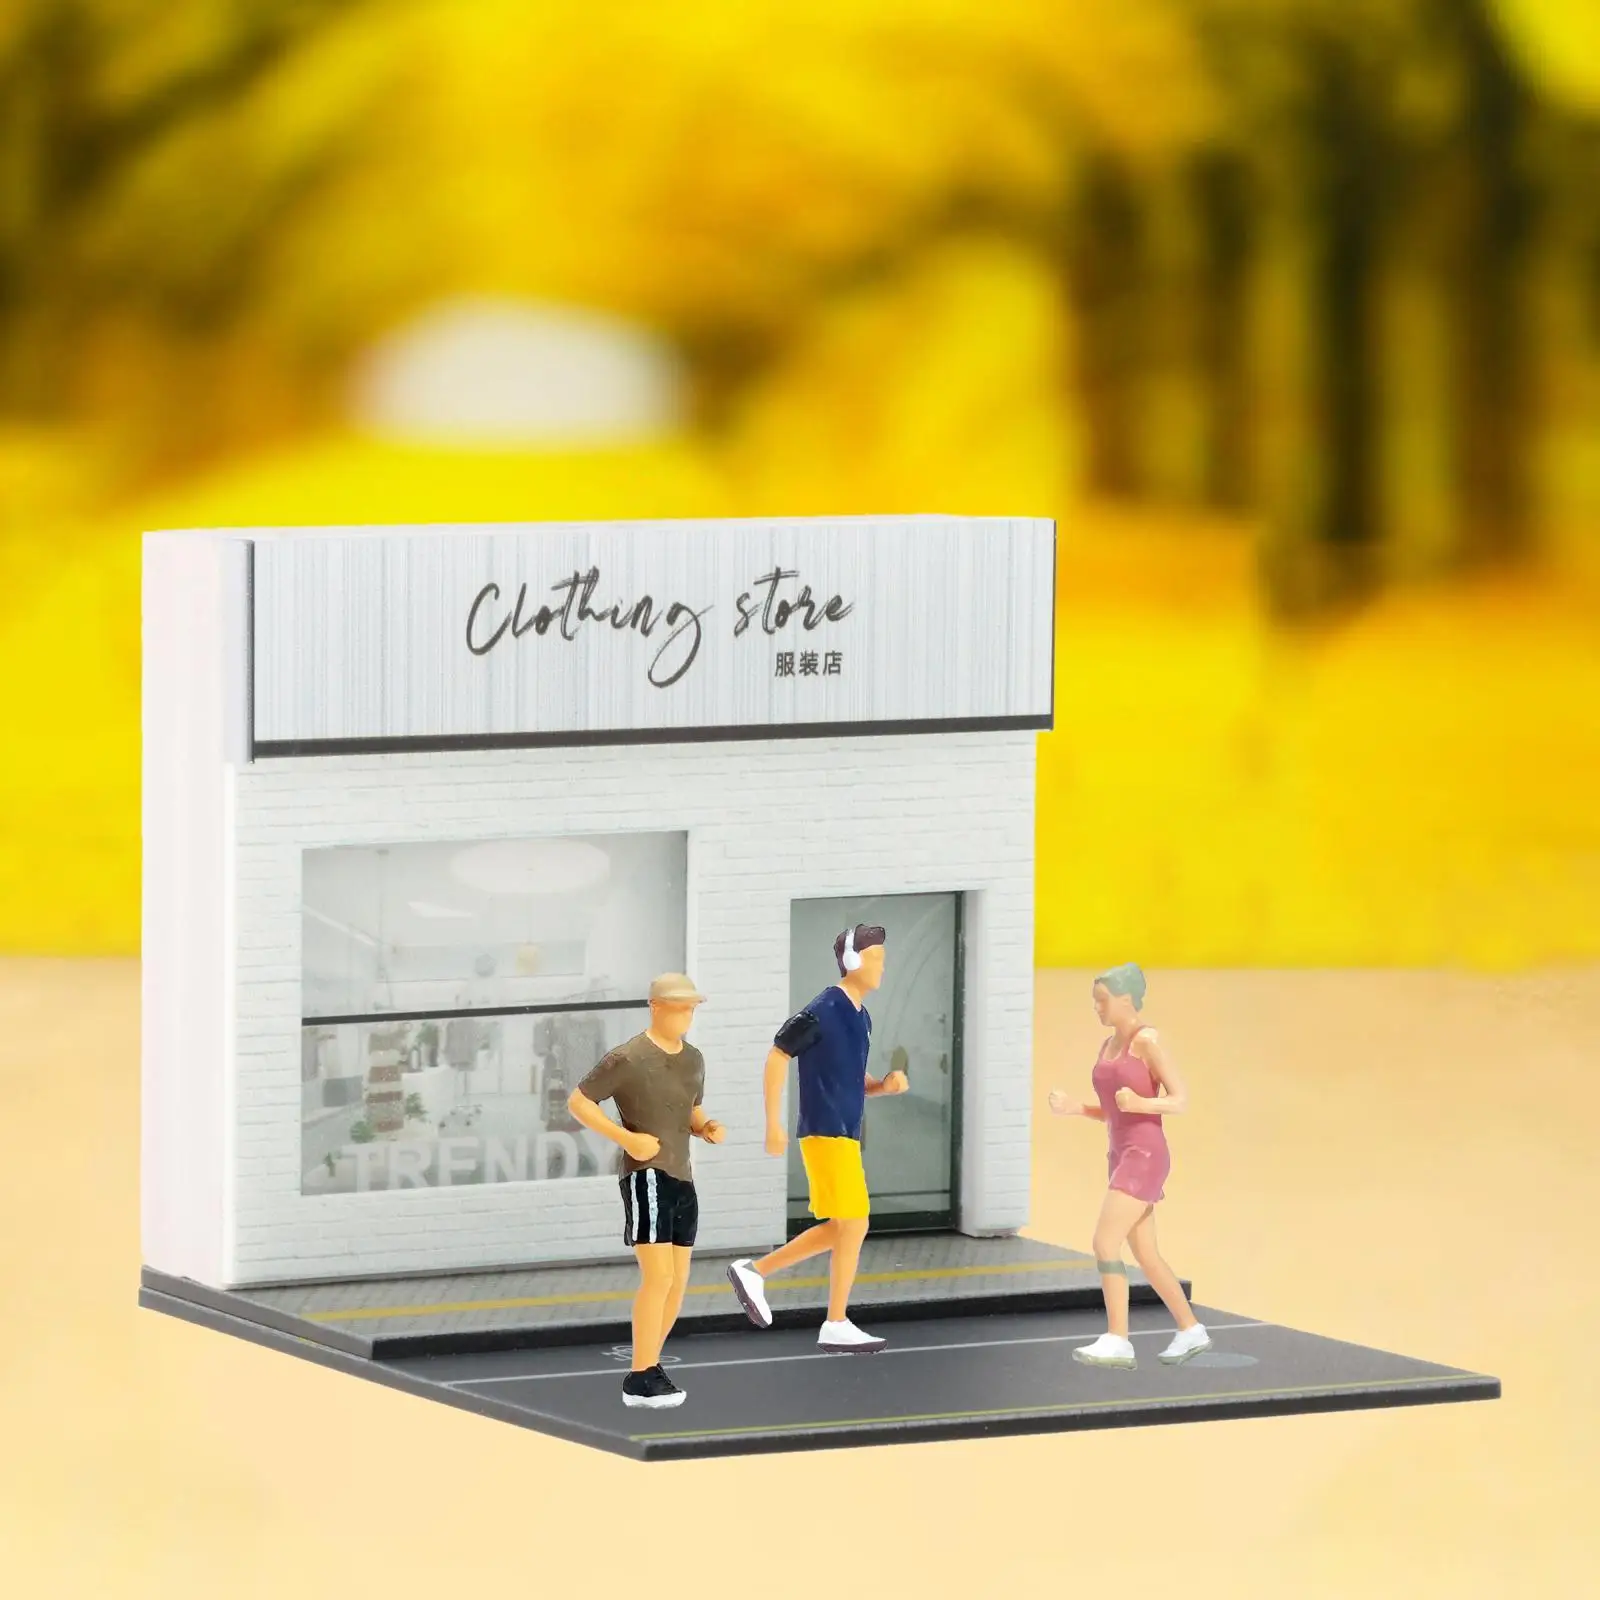 1/64 Shop Model Diorama Kits Miniature Layout for Micro Landscape Street Building Scene Props Model Train Dollhouse Decoration